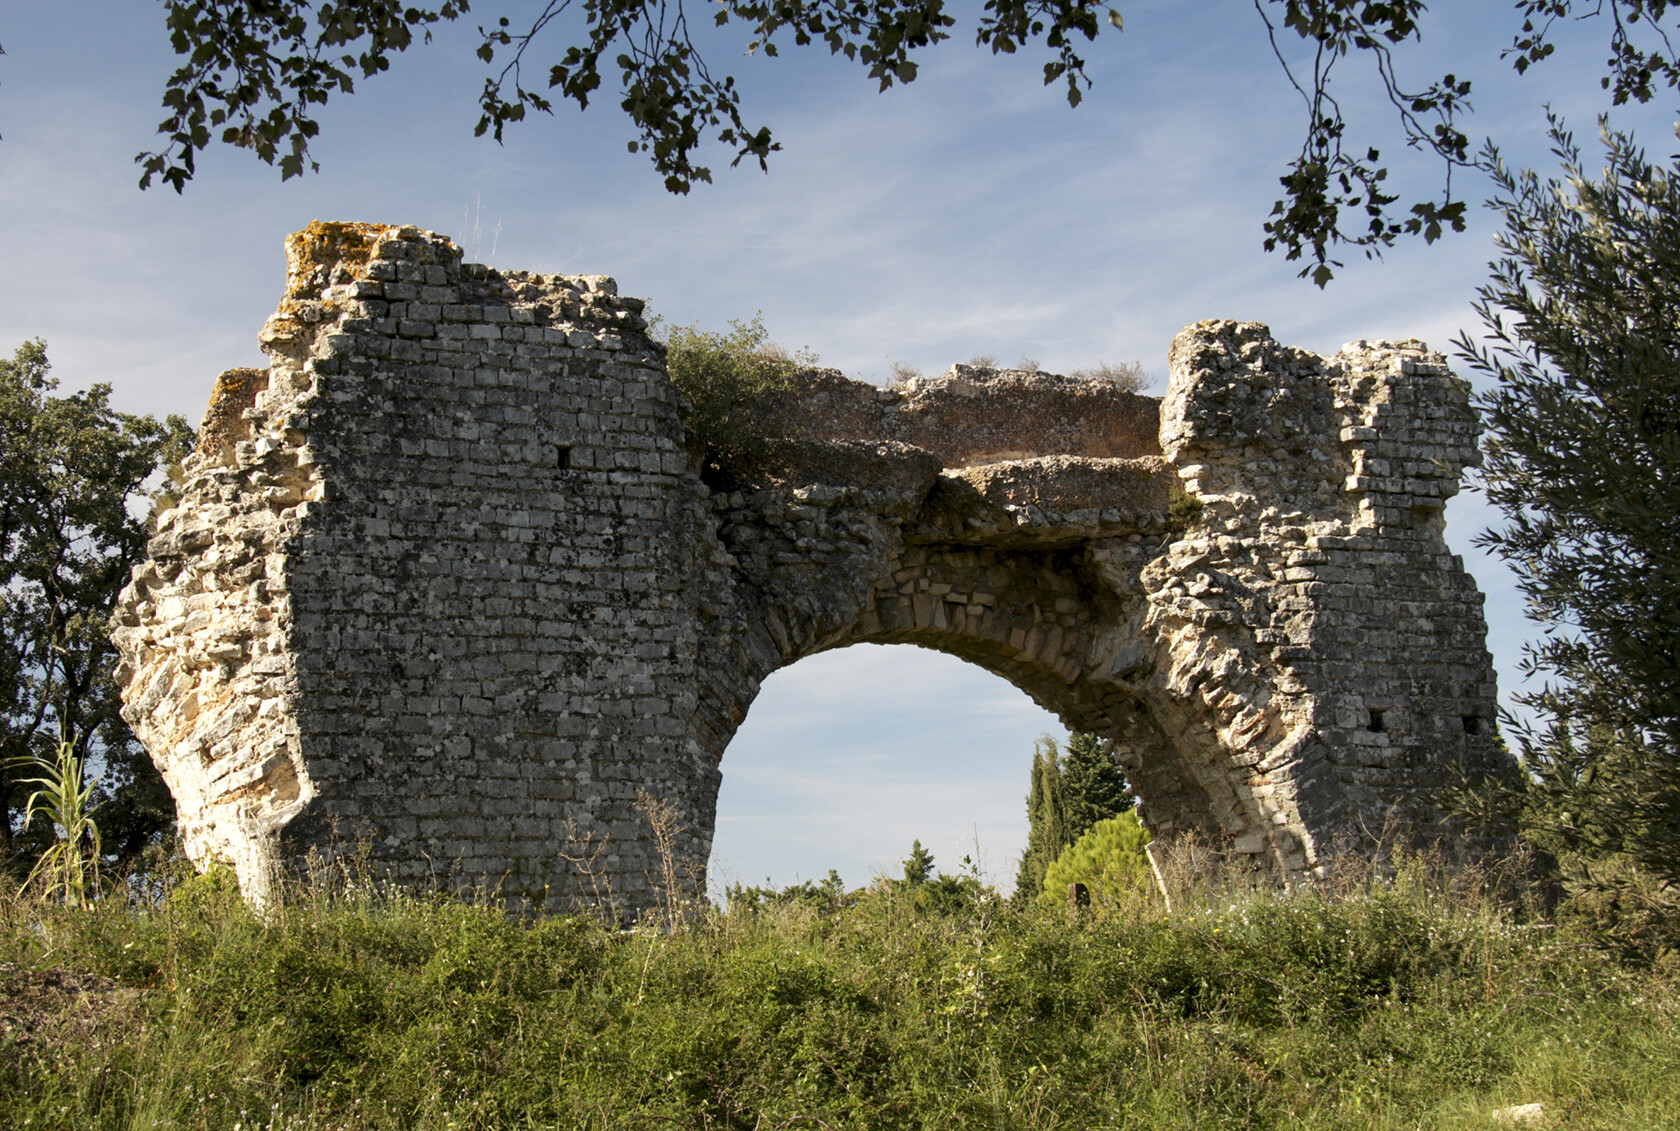 Barbegal aqueduct and mill